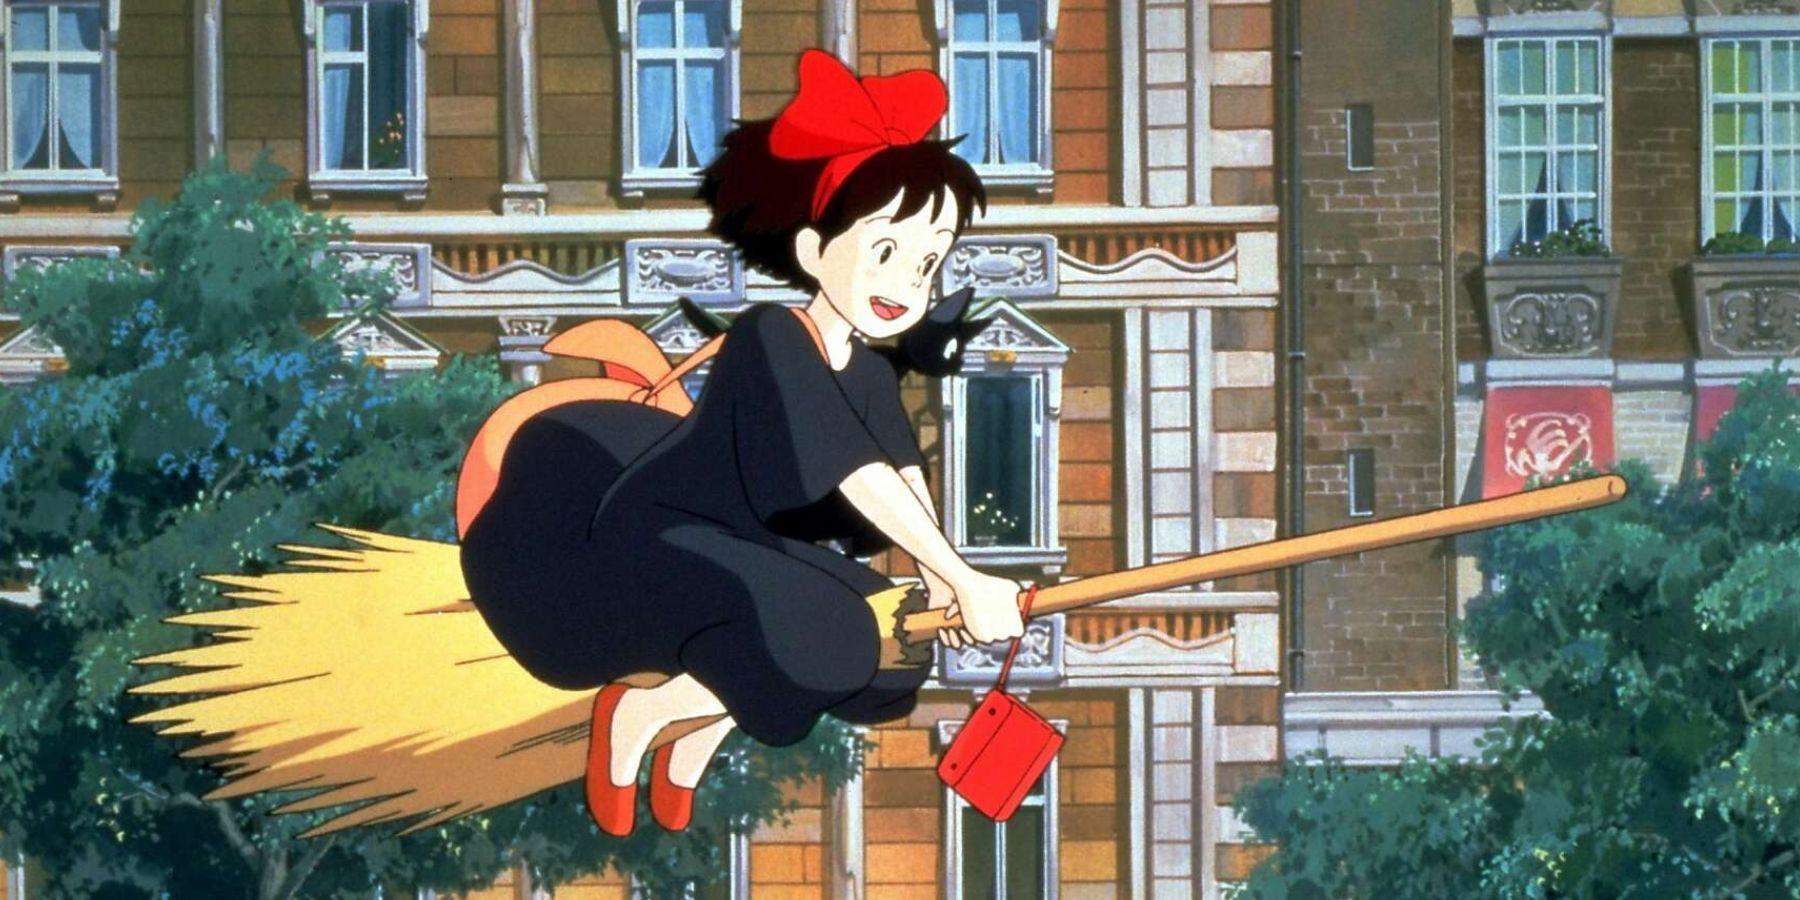 A obra-prima feminista do Studio Ghibli